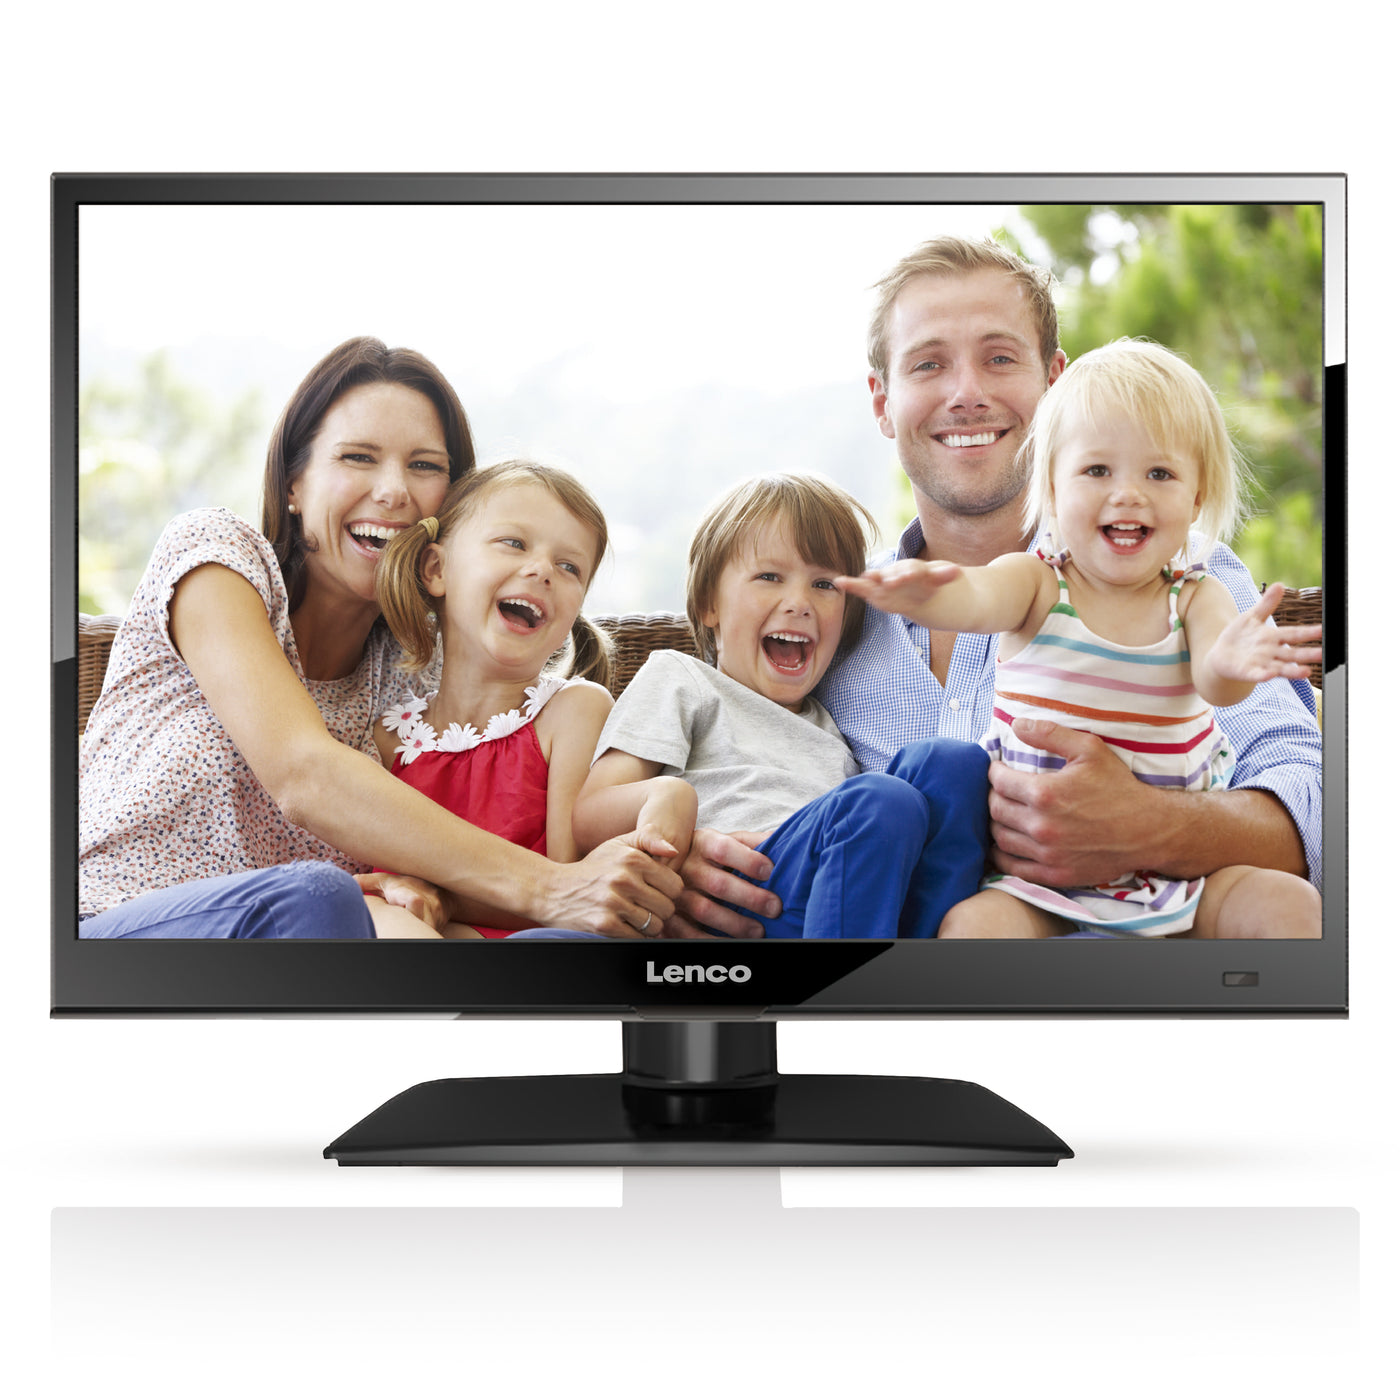 LENCO DVL-1662BK - HD LED-TV 16" DVB-T/T2/S2/C Built-in DVD player - Black